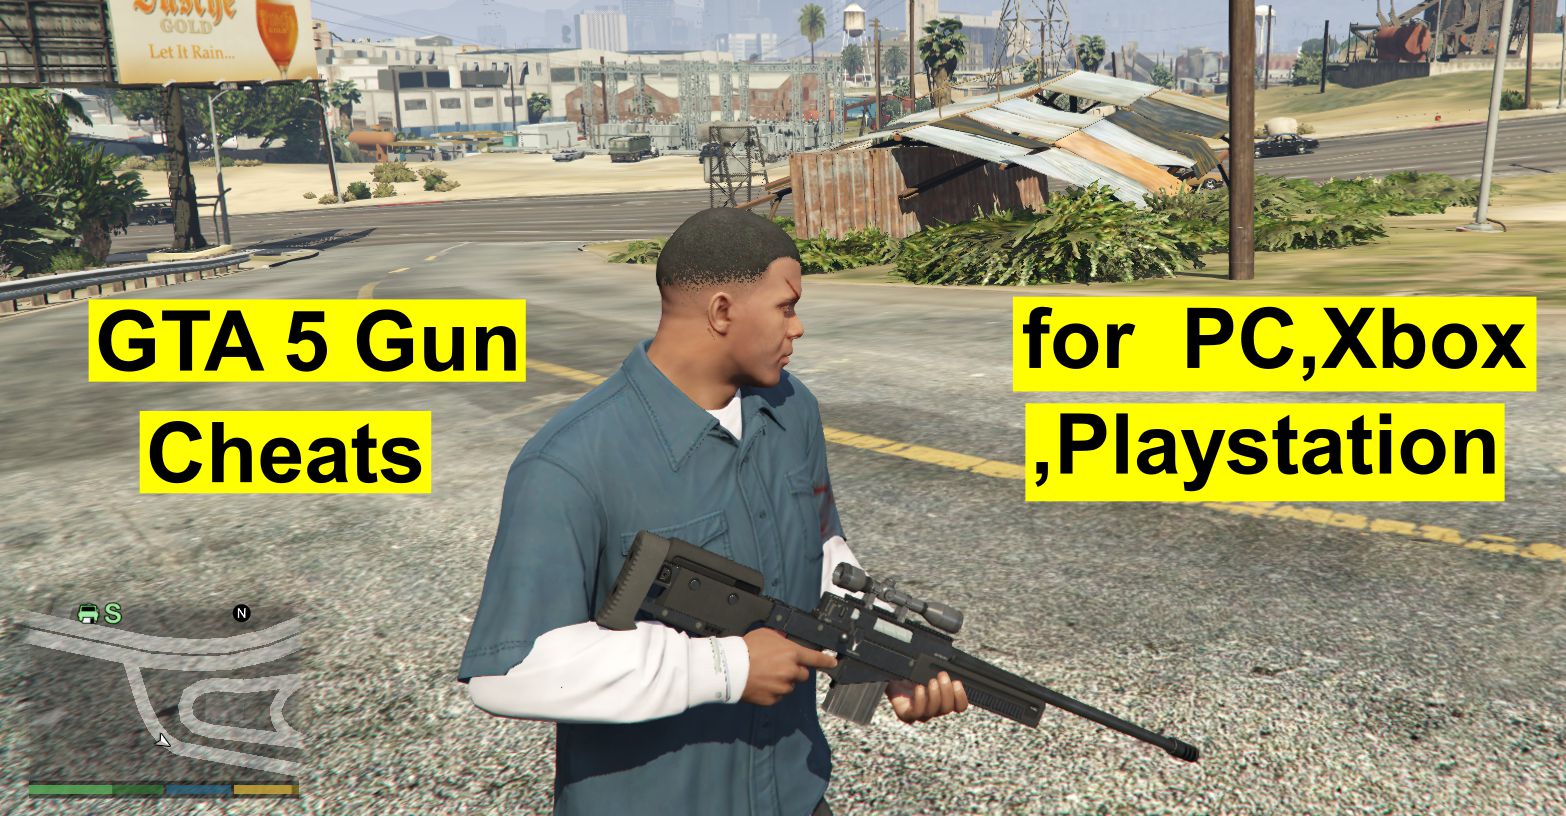 GTA 5 gun cheats for - PC,Xbox,Playstation